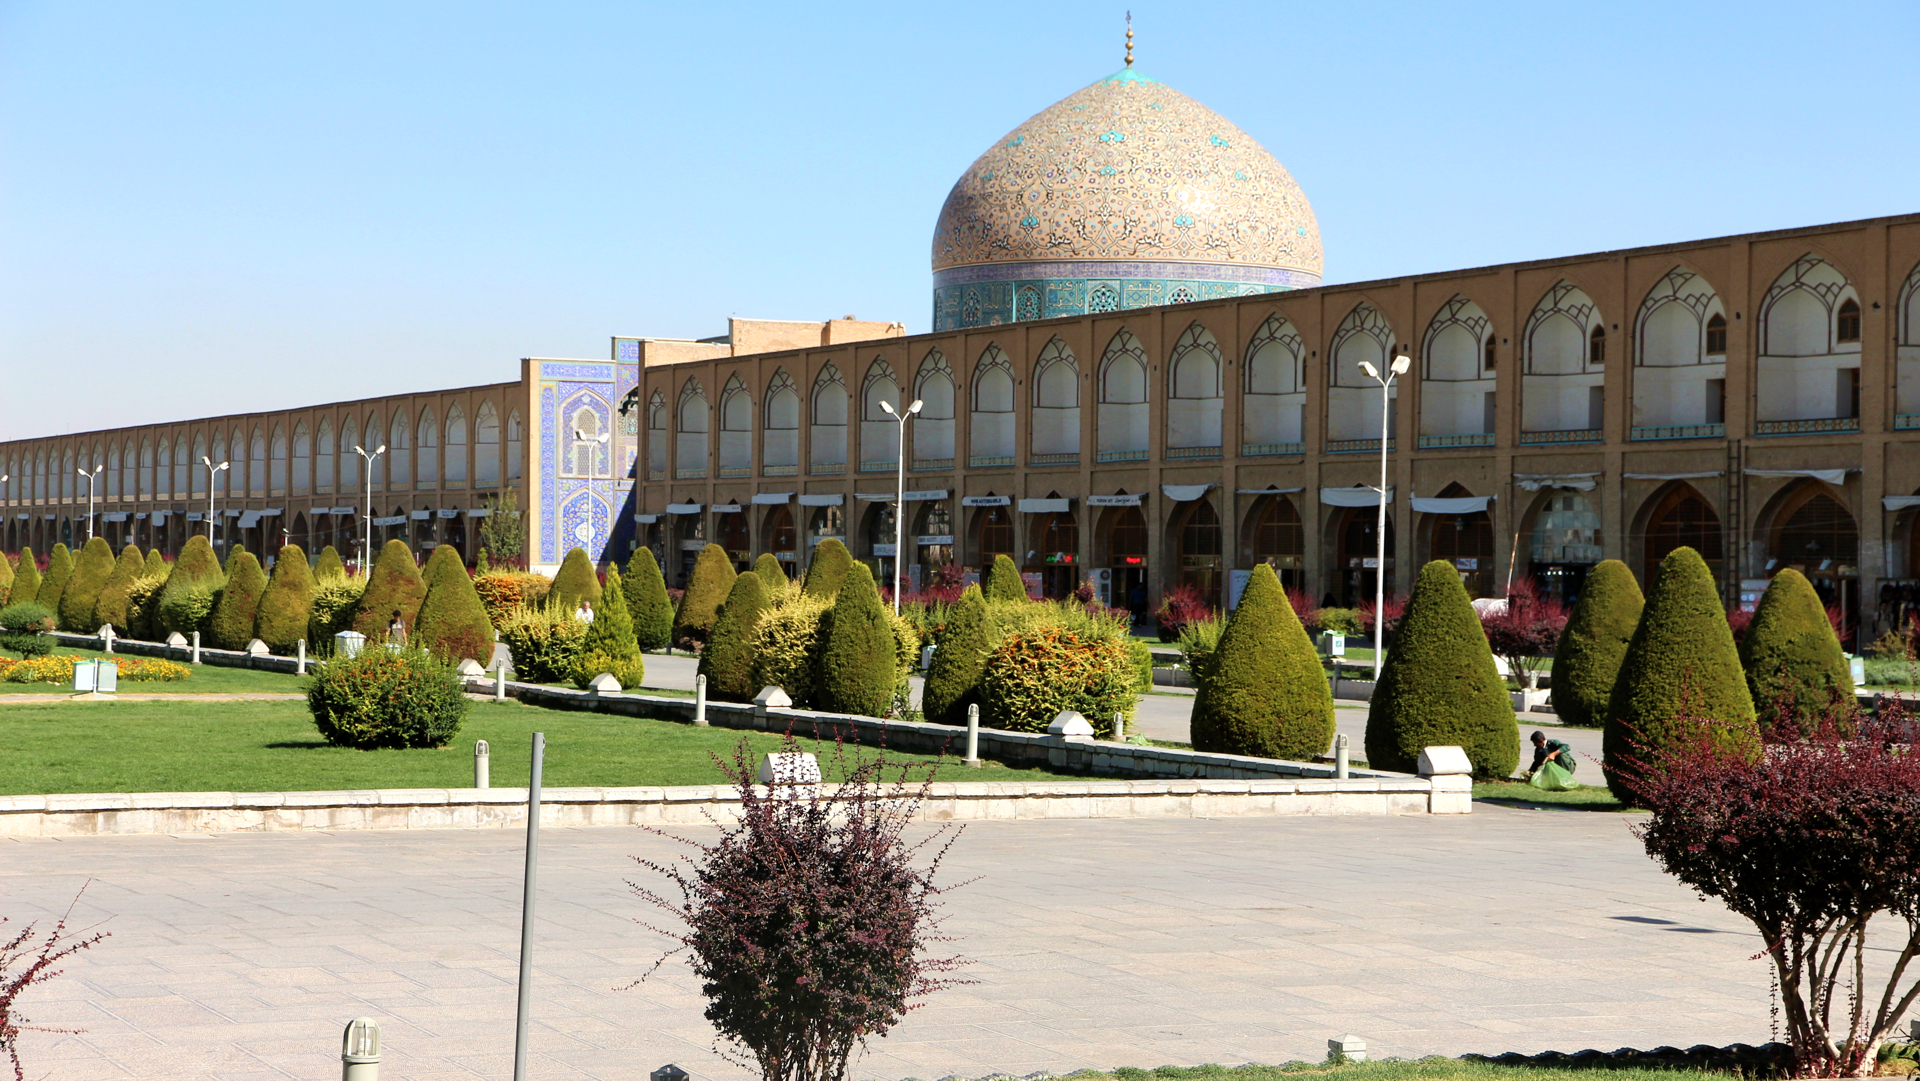 Lotfolla-Moschee am großen Imam-Platz in Esfahan